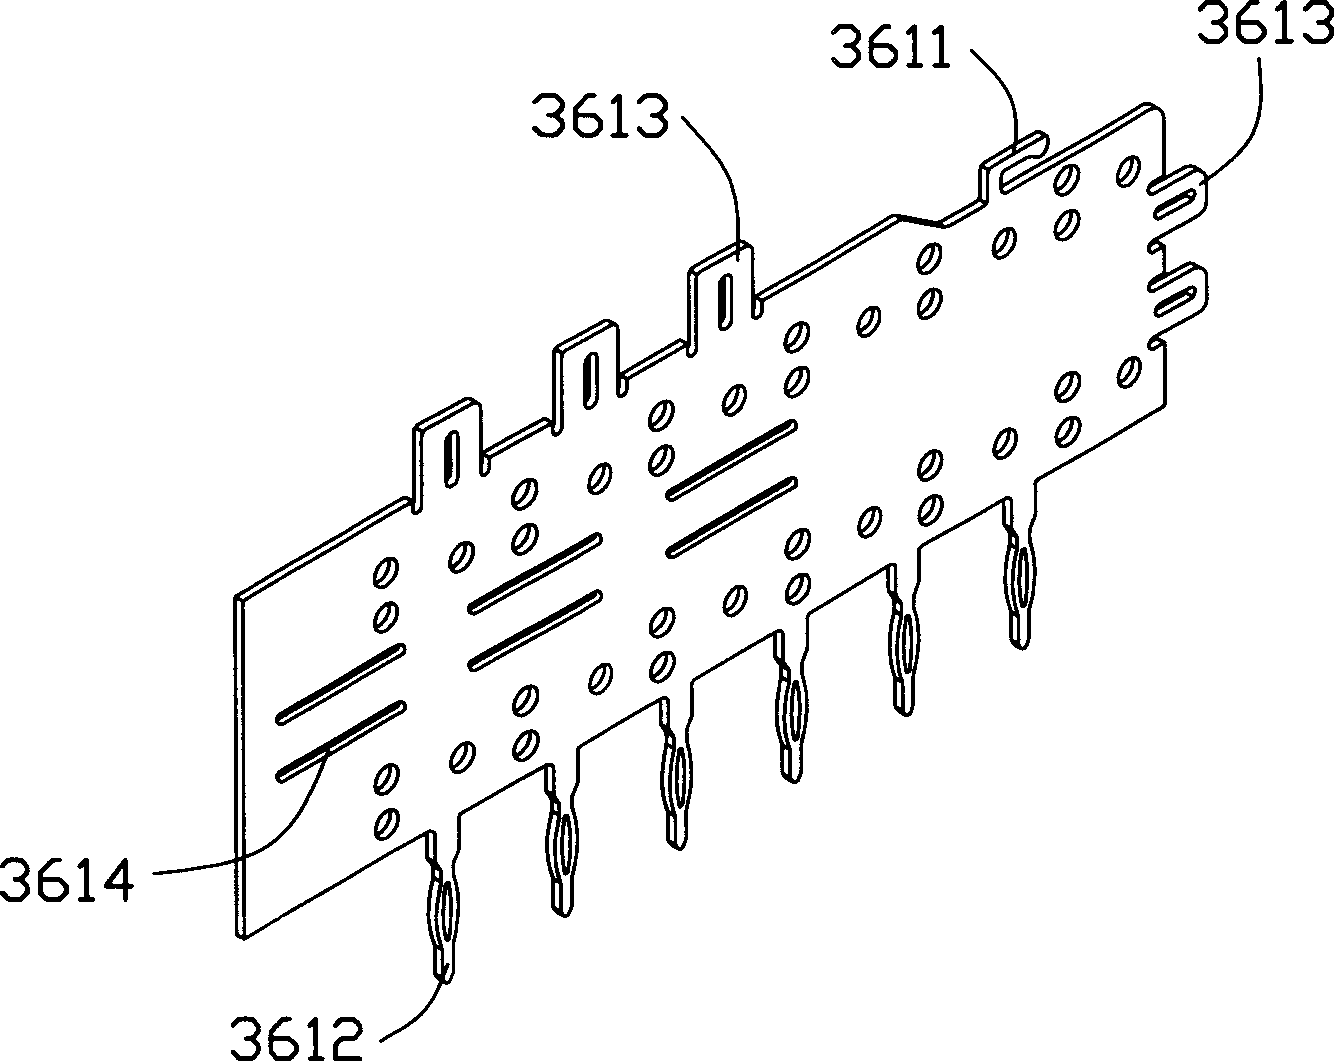 Connector module